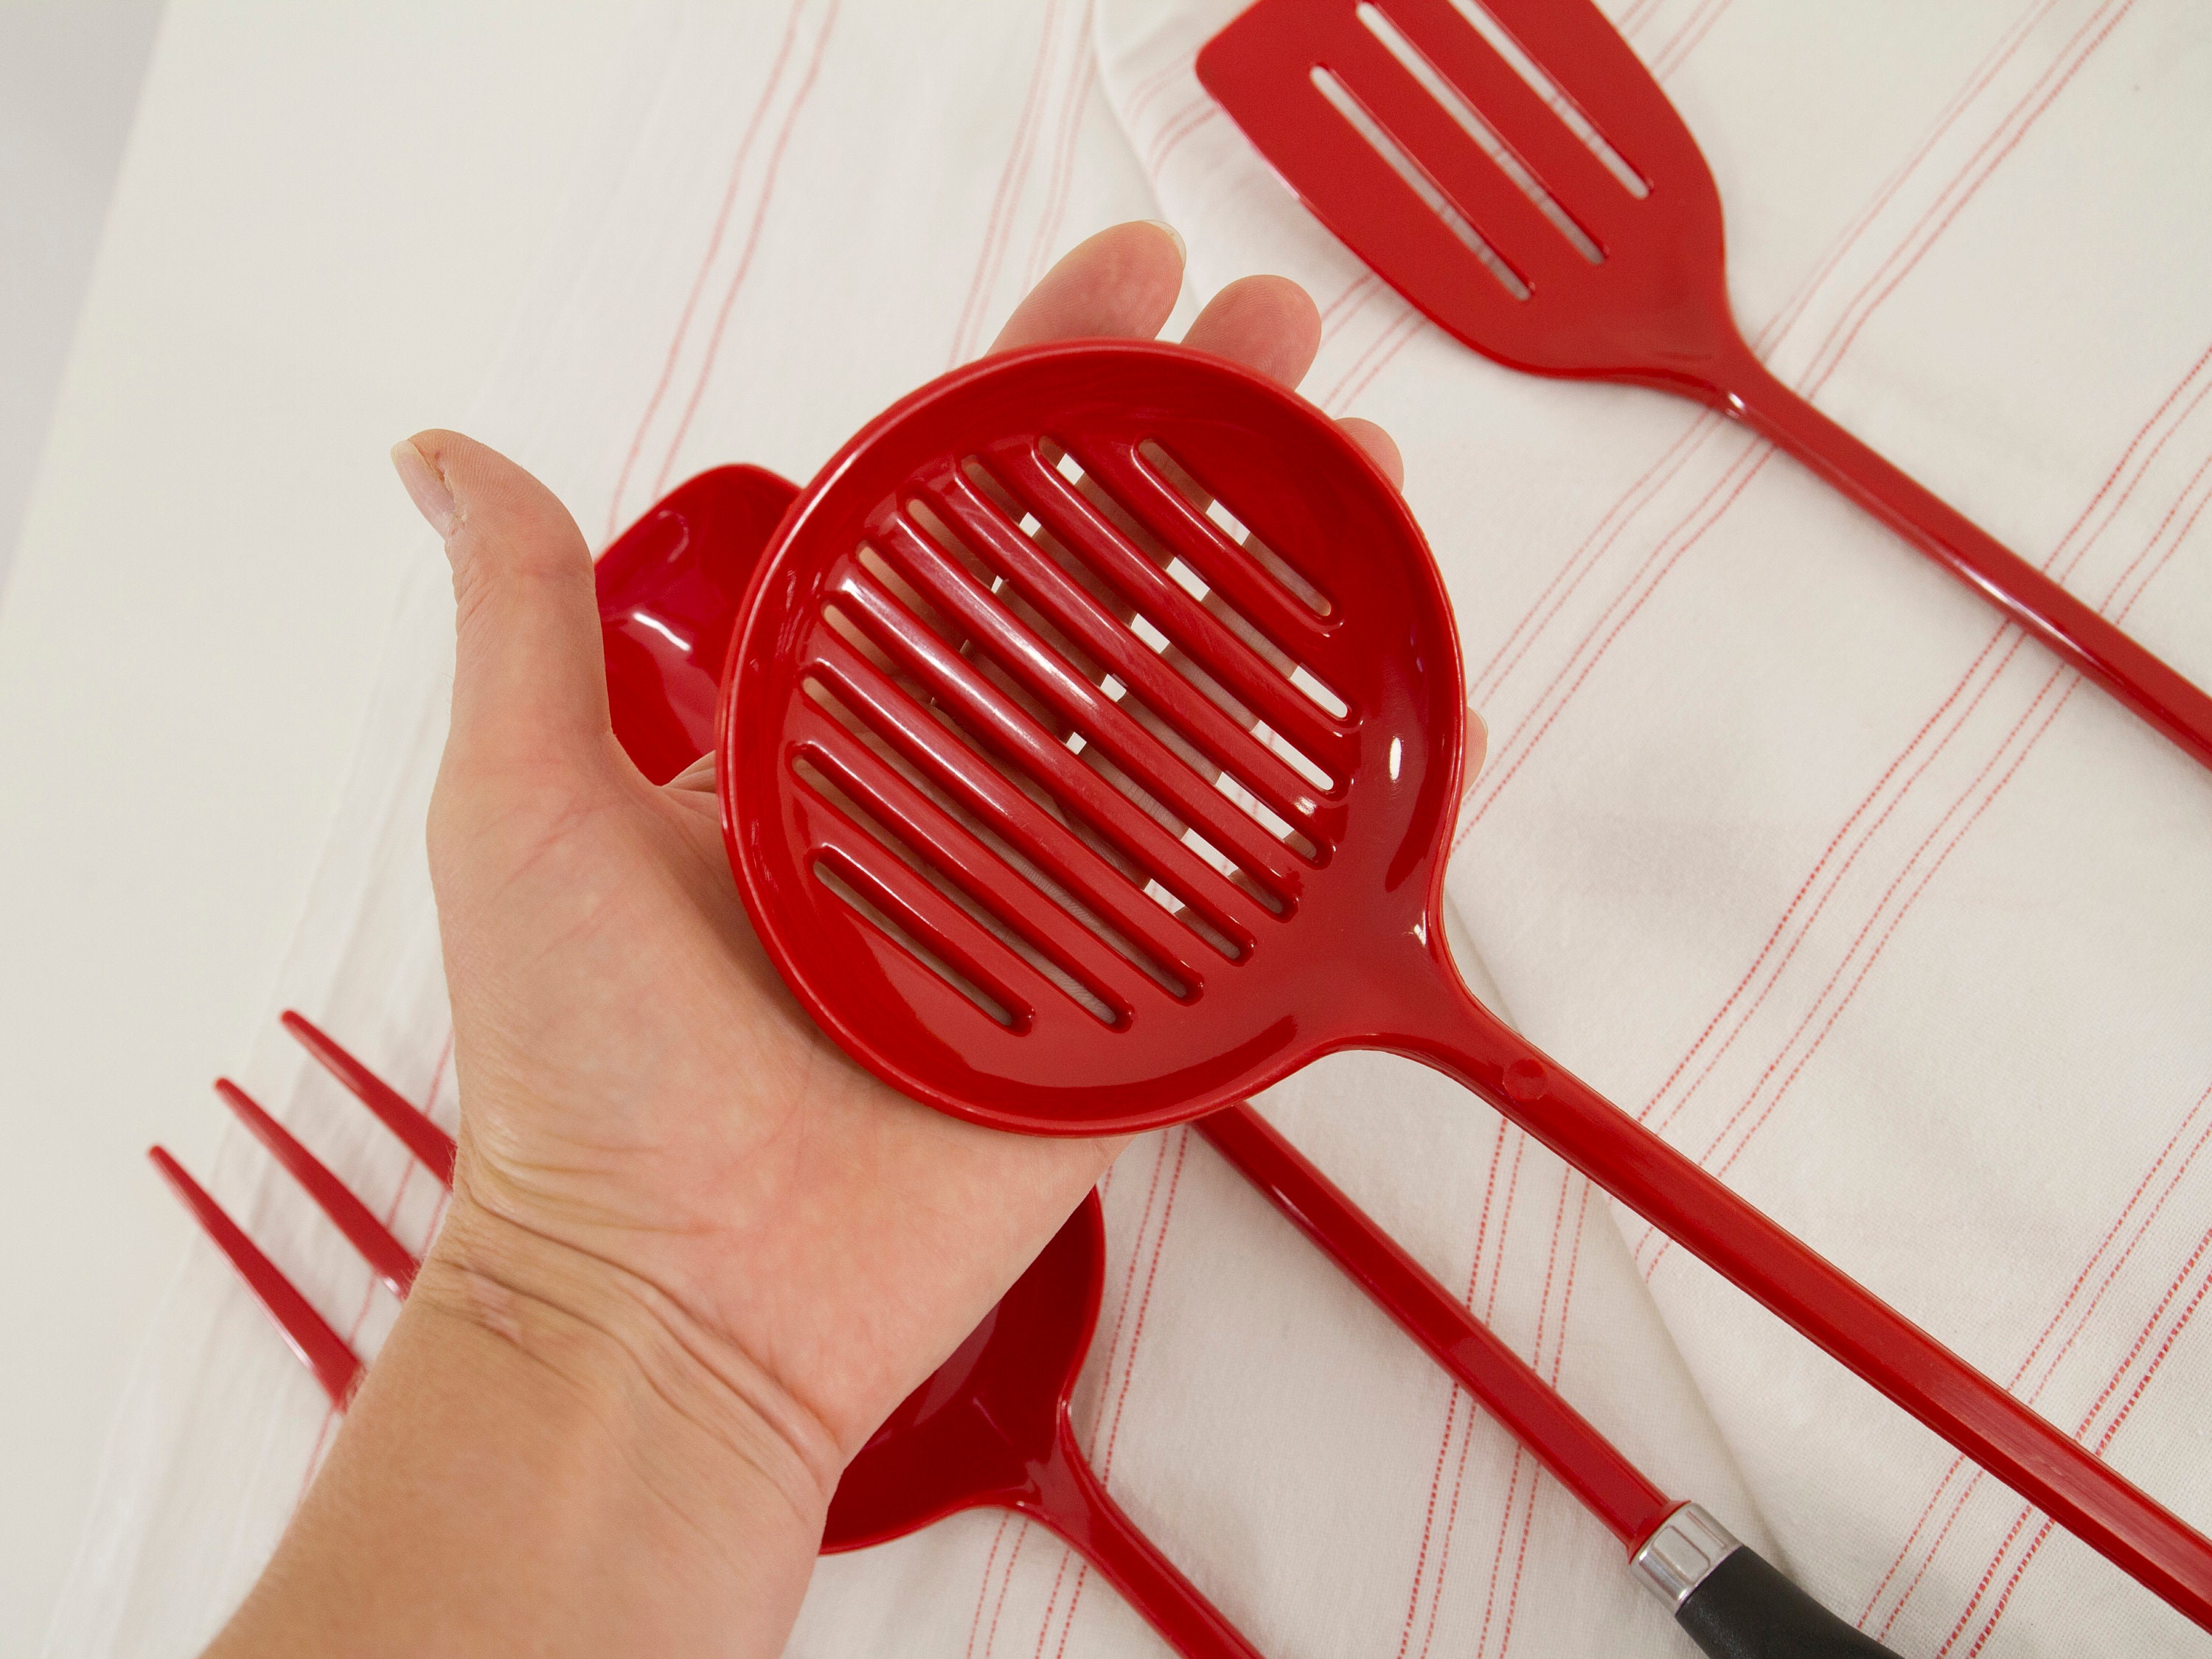 Vintage Red Plastic Kitchen Utensils, Pedrini Kitchen Tools 5 Pcs Italian  Design, Retro 1980s 